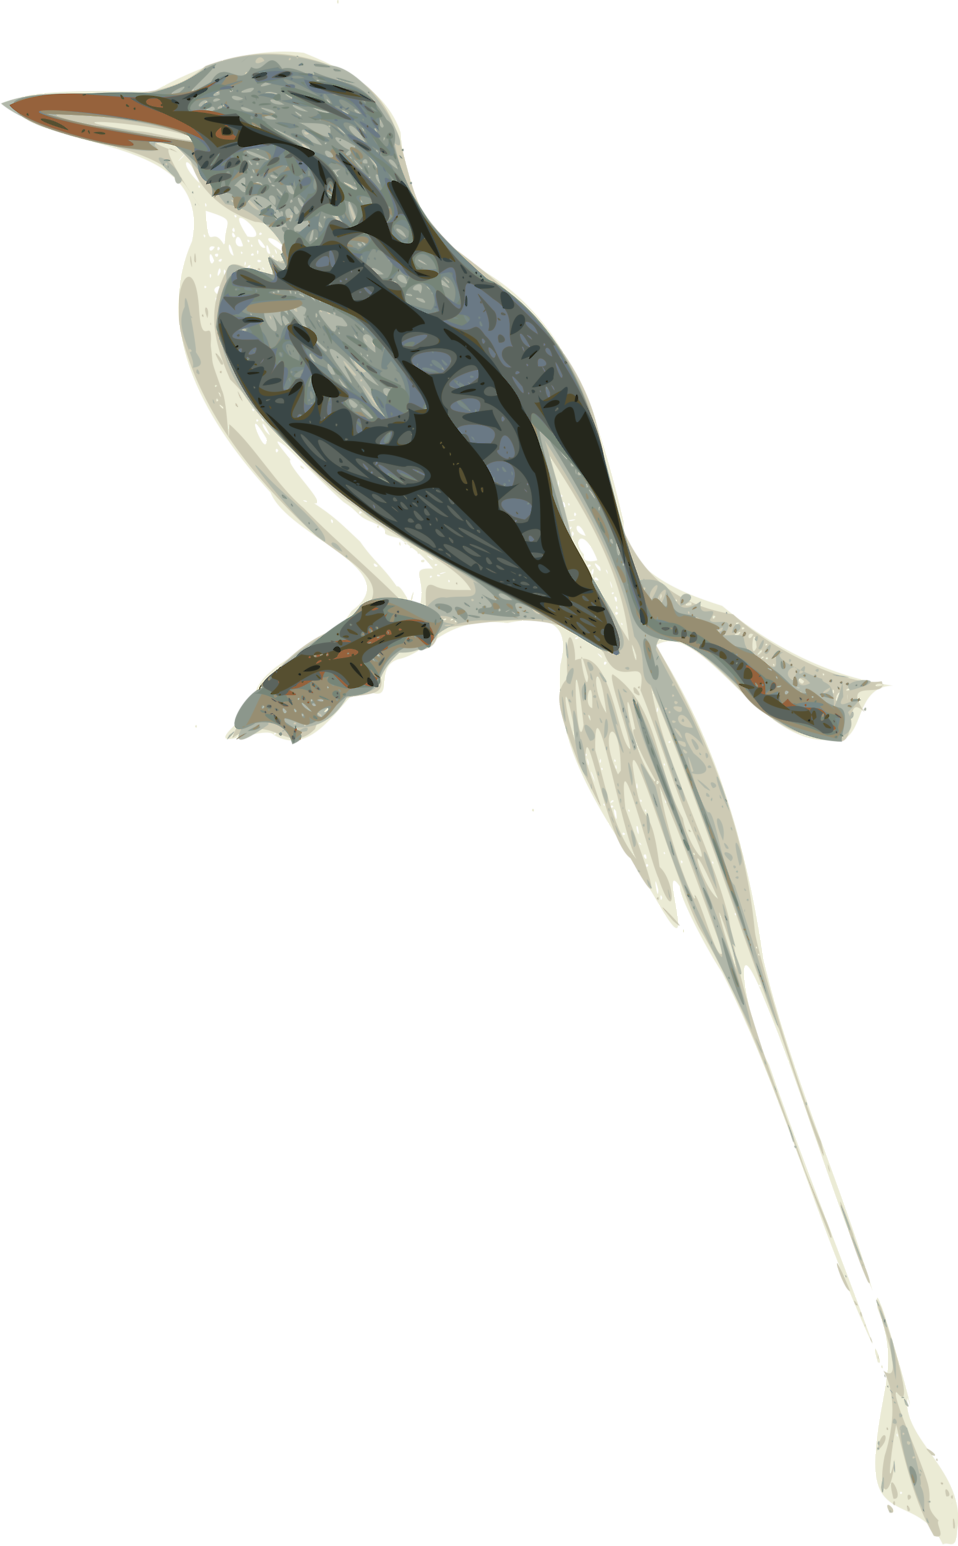 Free stock photo illustration. Clipart bird branch